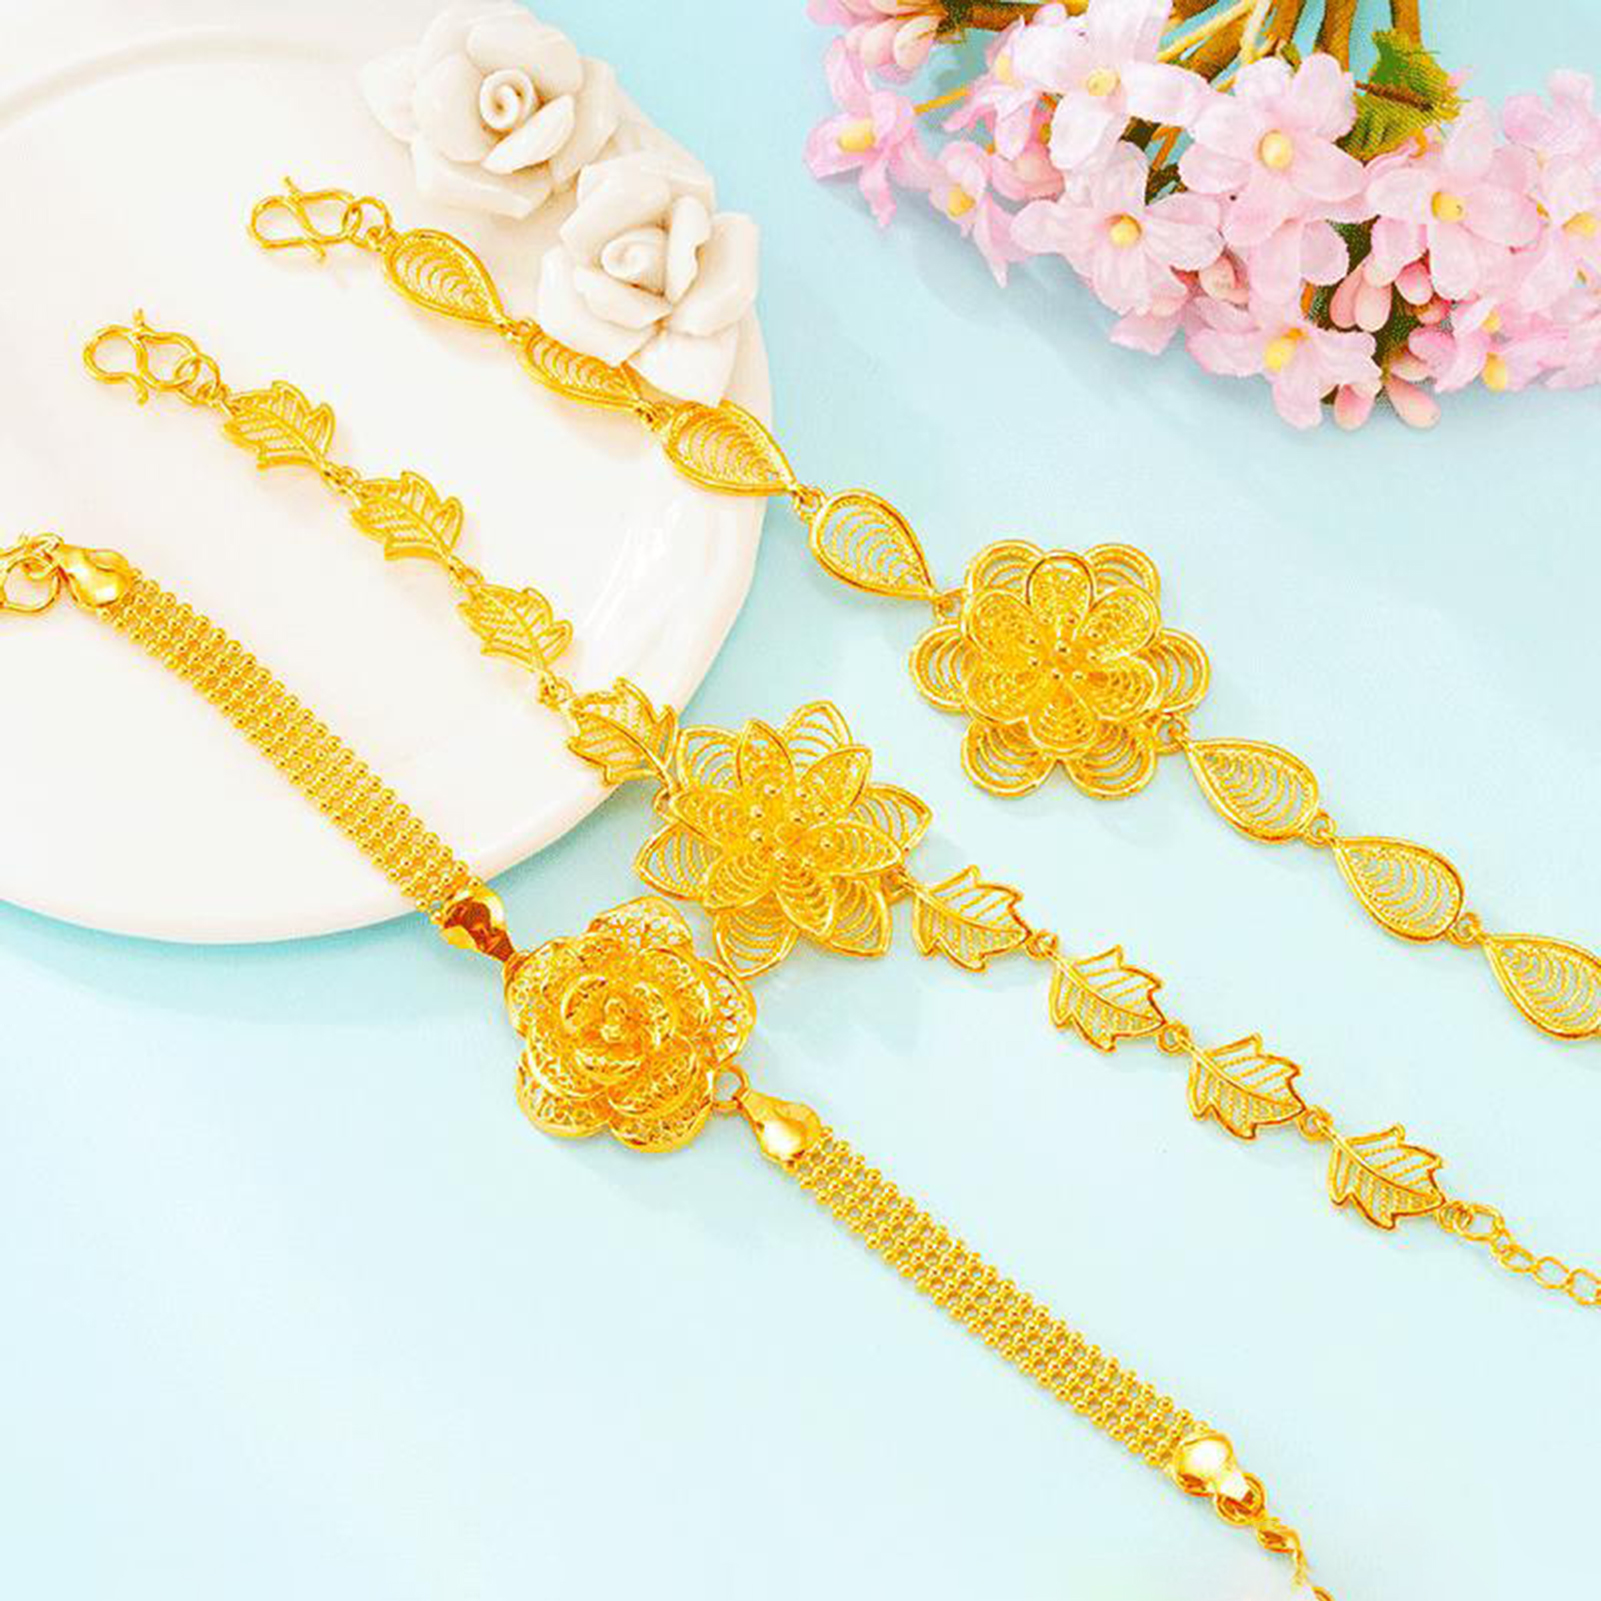 Ayyufe Rose Gold Bracelets 8.99 Flower Bracelet Anti-oxidation